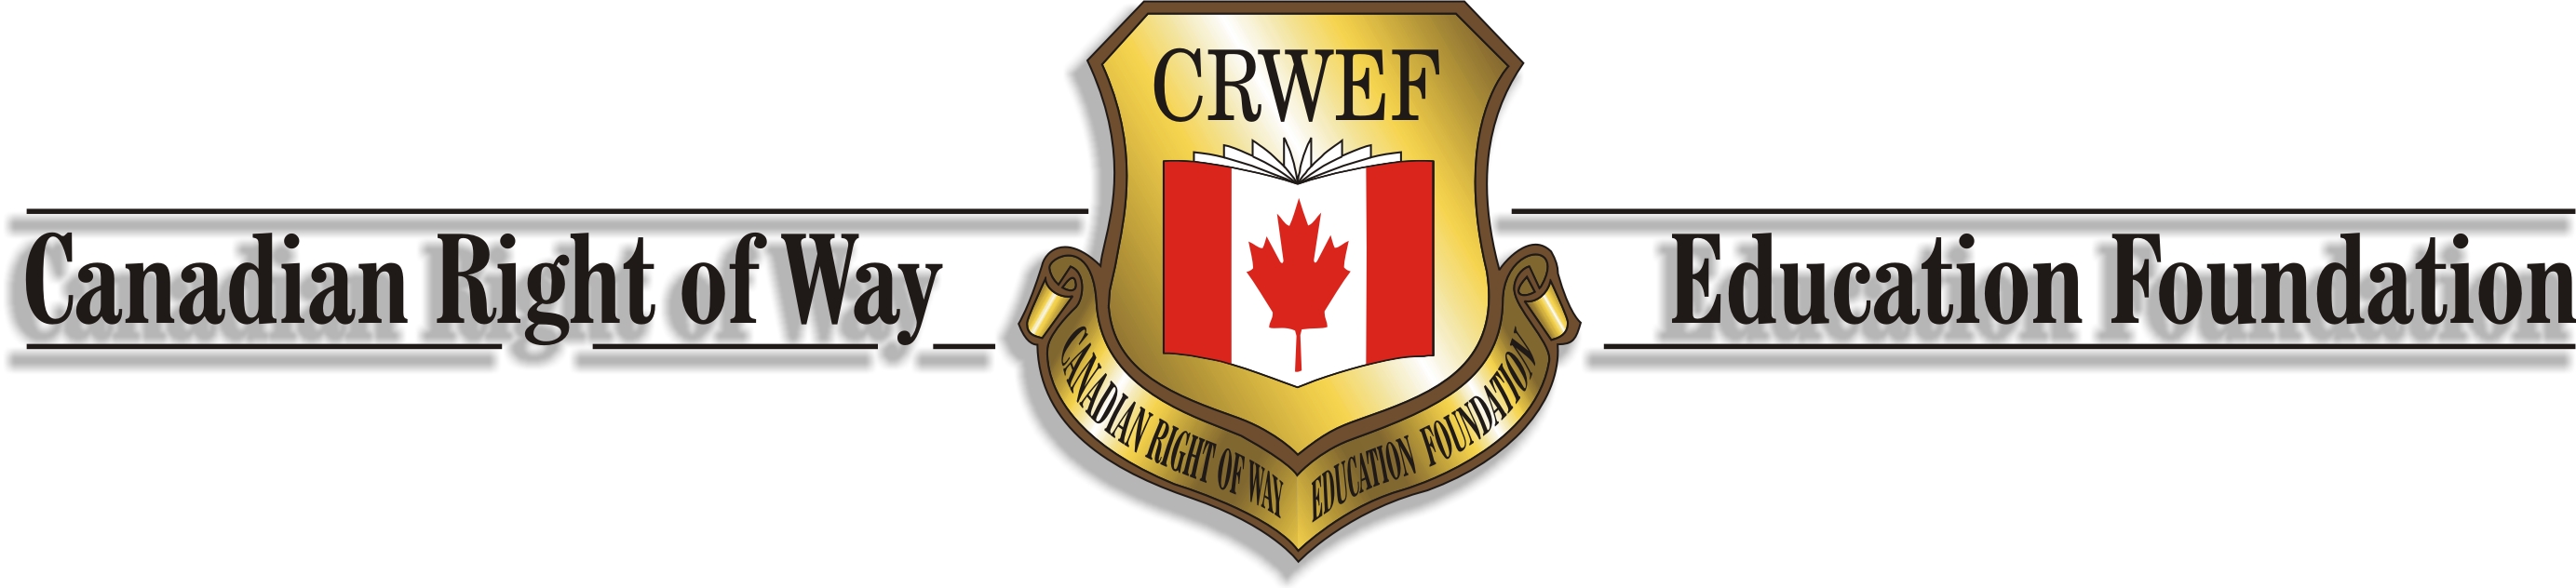 CRWEF Canadian Right of Way Education Foundation